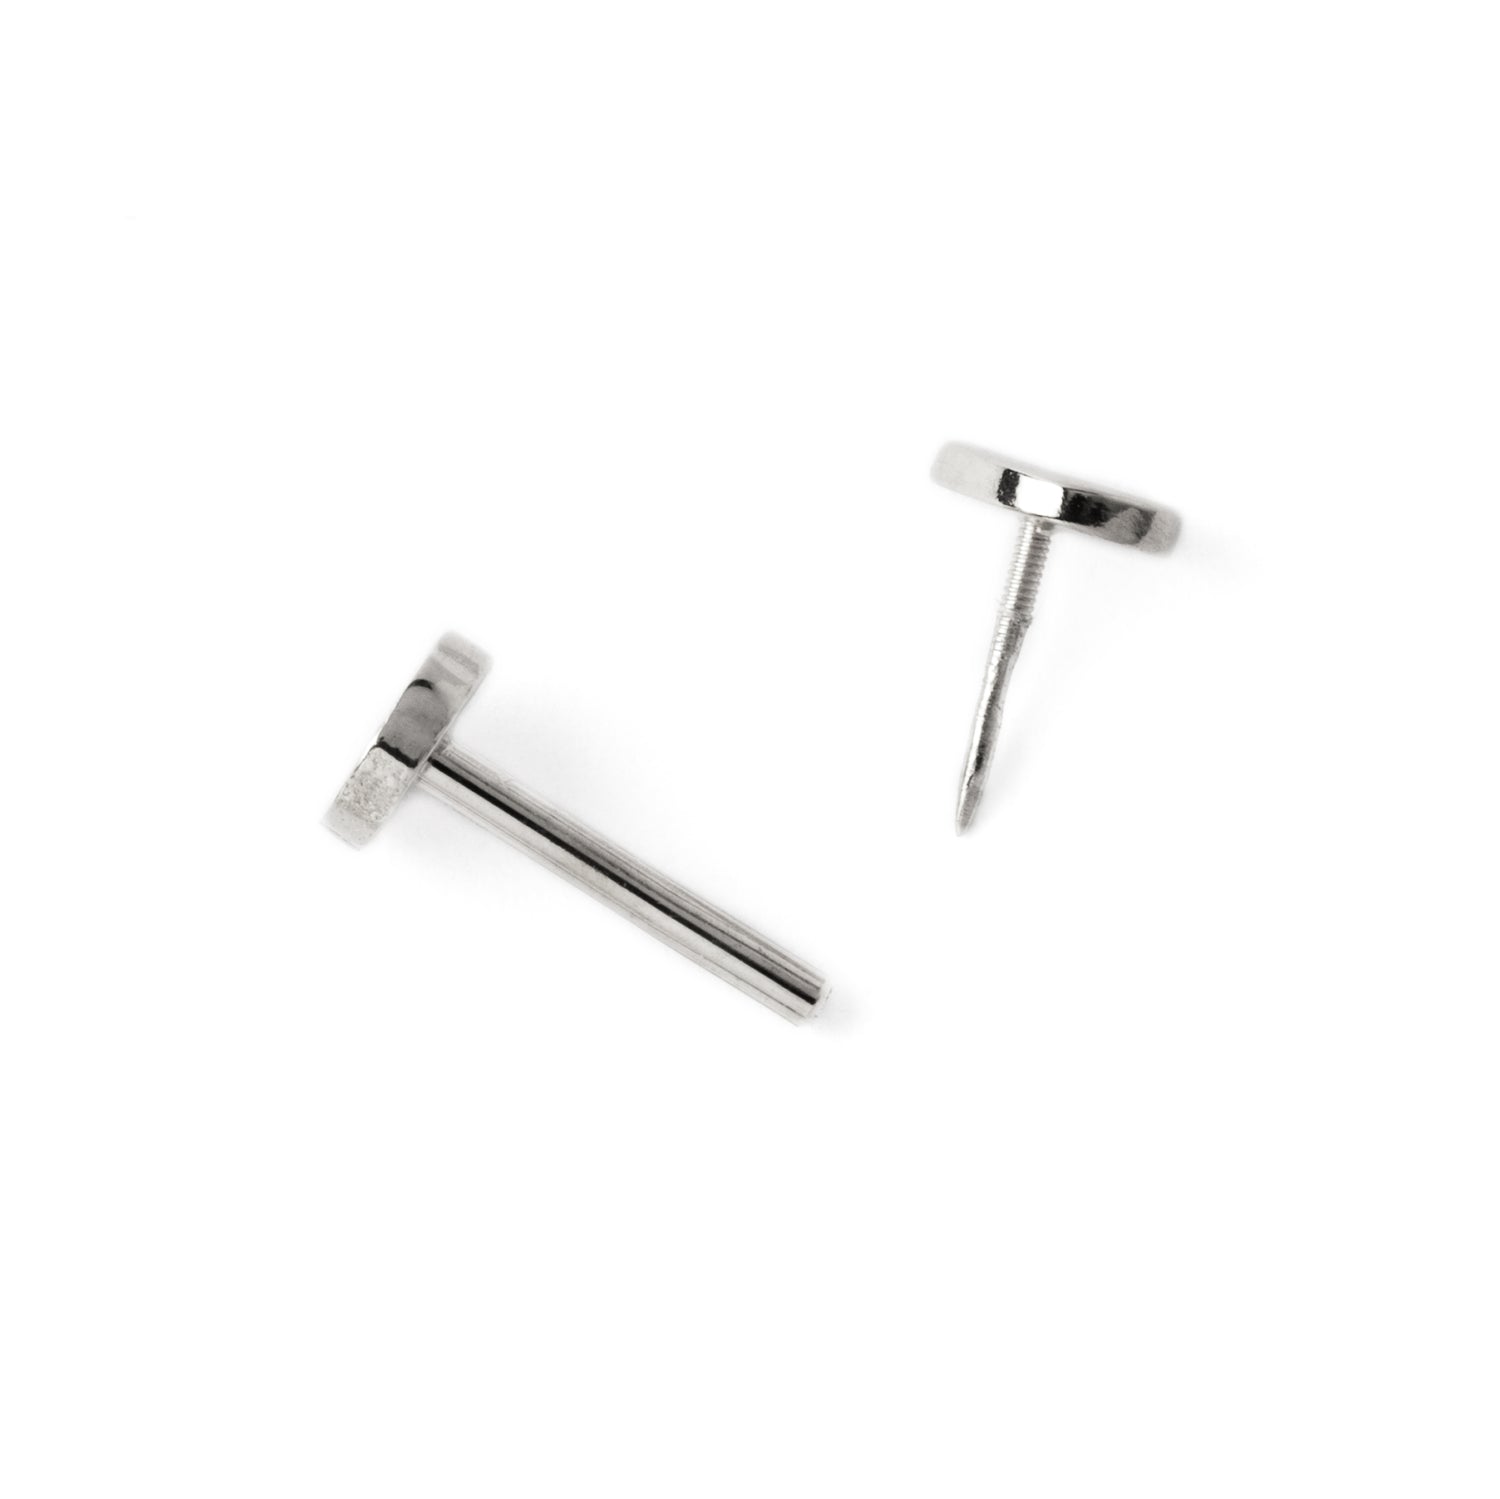 14k white Gold internally threaded screw back earring 1.2mm (16g), 8mm, teardrop labret stud closure view